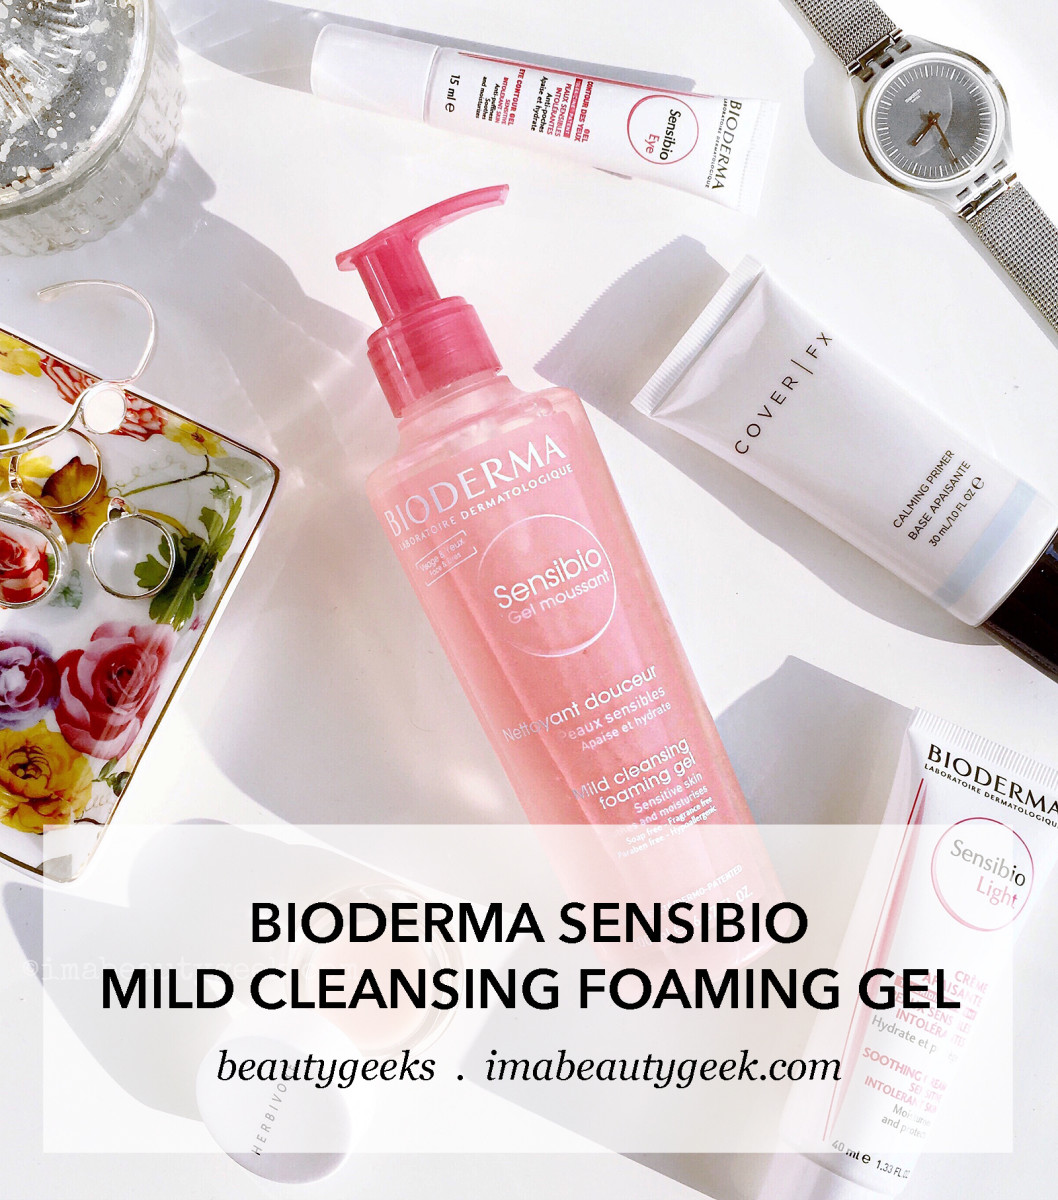 Bioderma Sensibio Mild Cleansing Foaming Gel_pH balanced_BEAUTYGEEKS_imabeautygeek.com